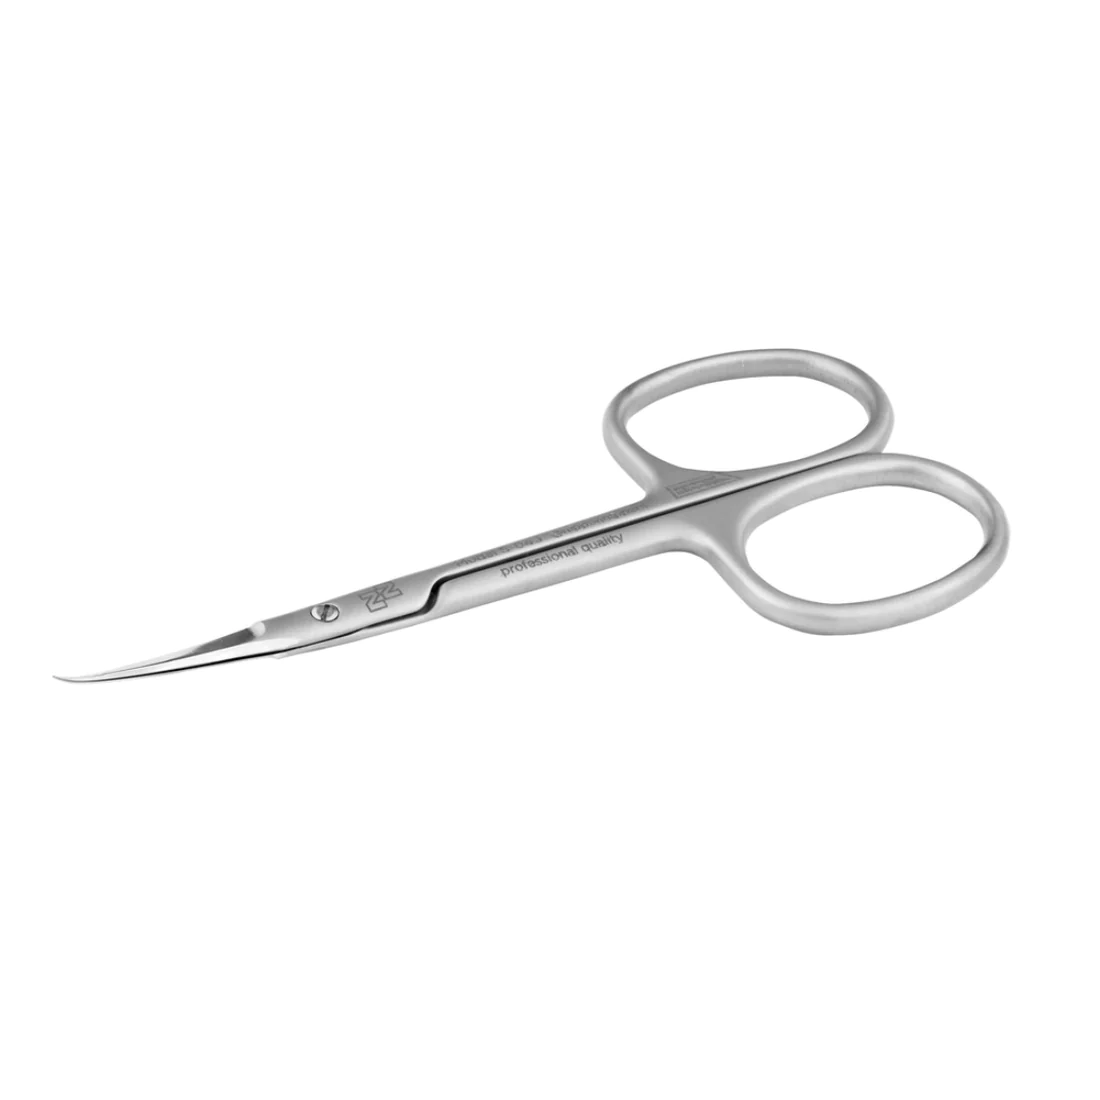 NIPPON NIPPERS Cuticle scissors S-04J